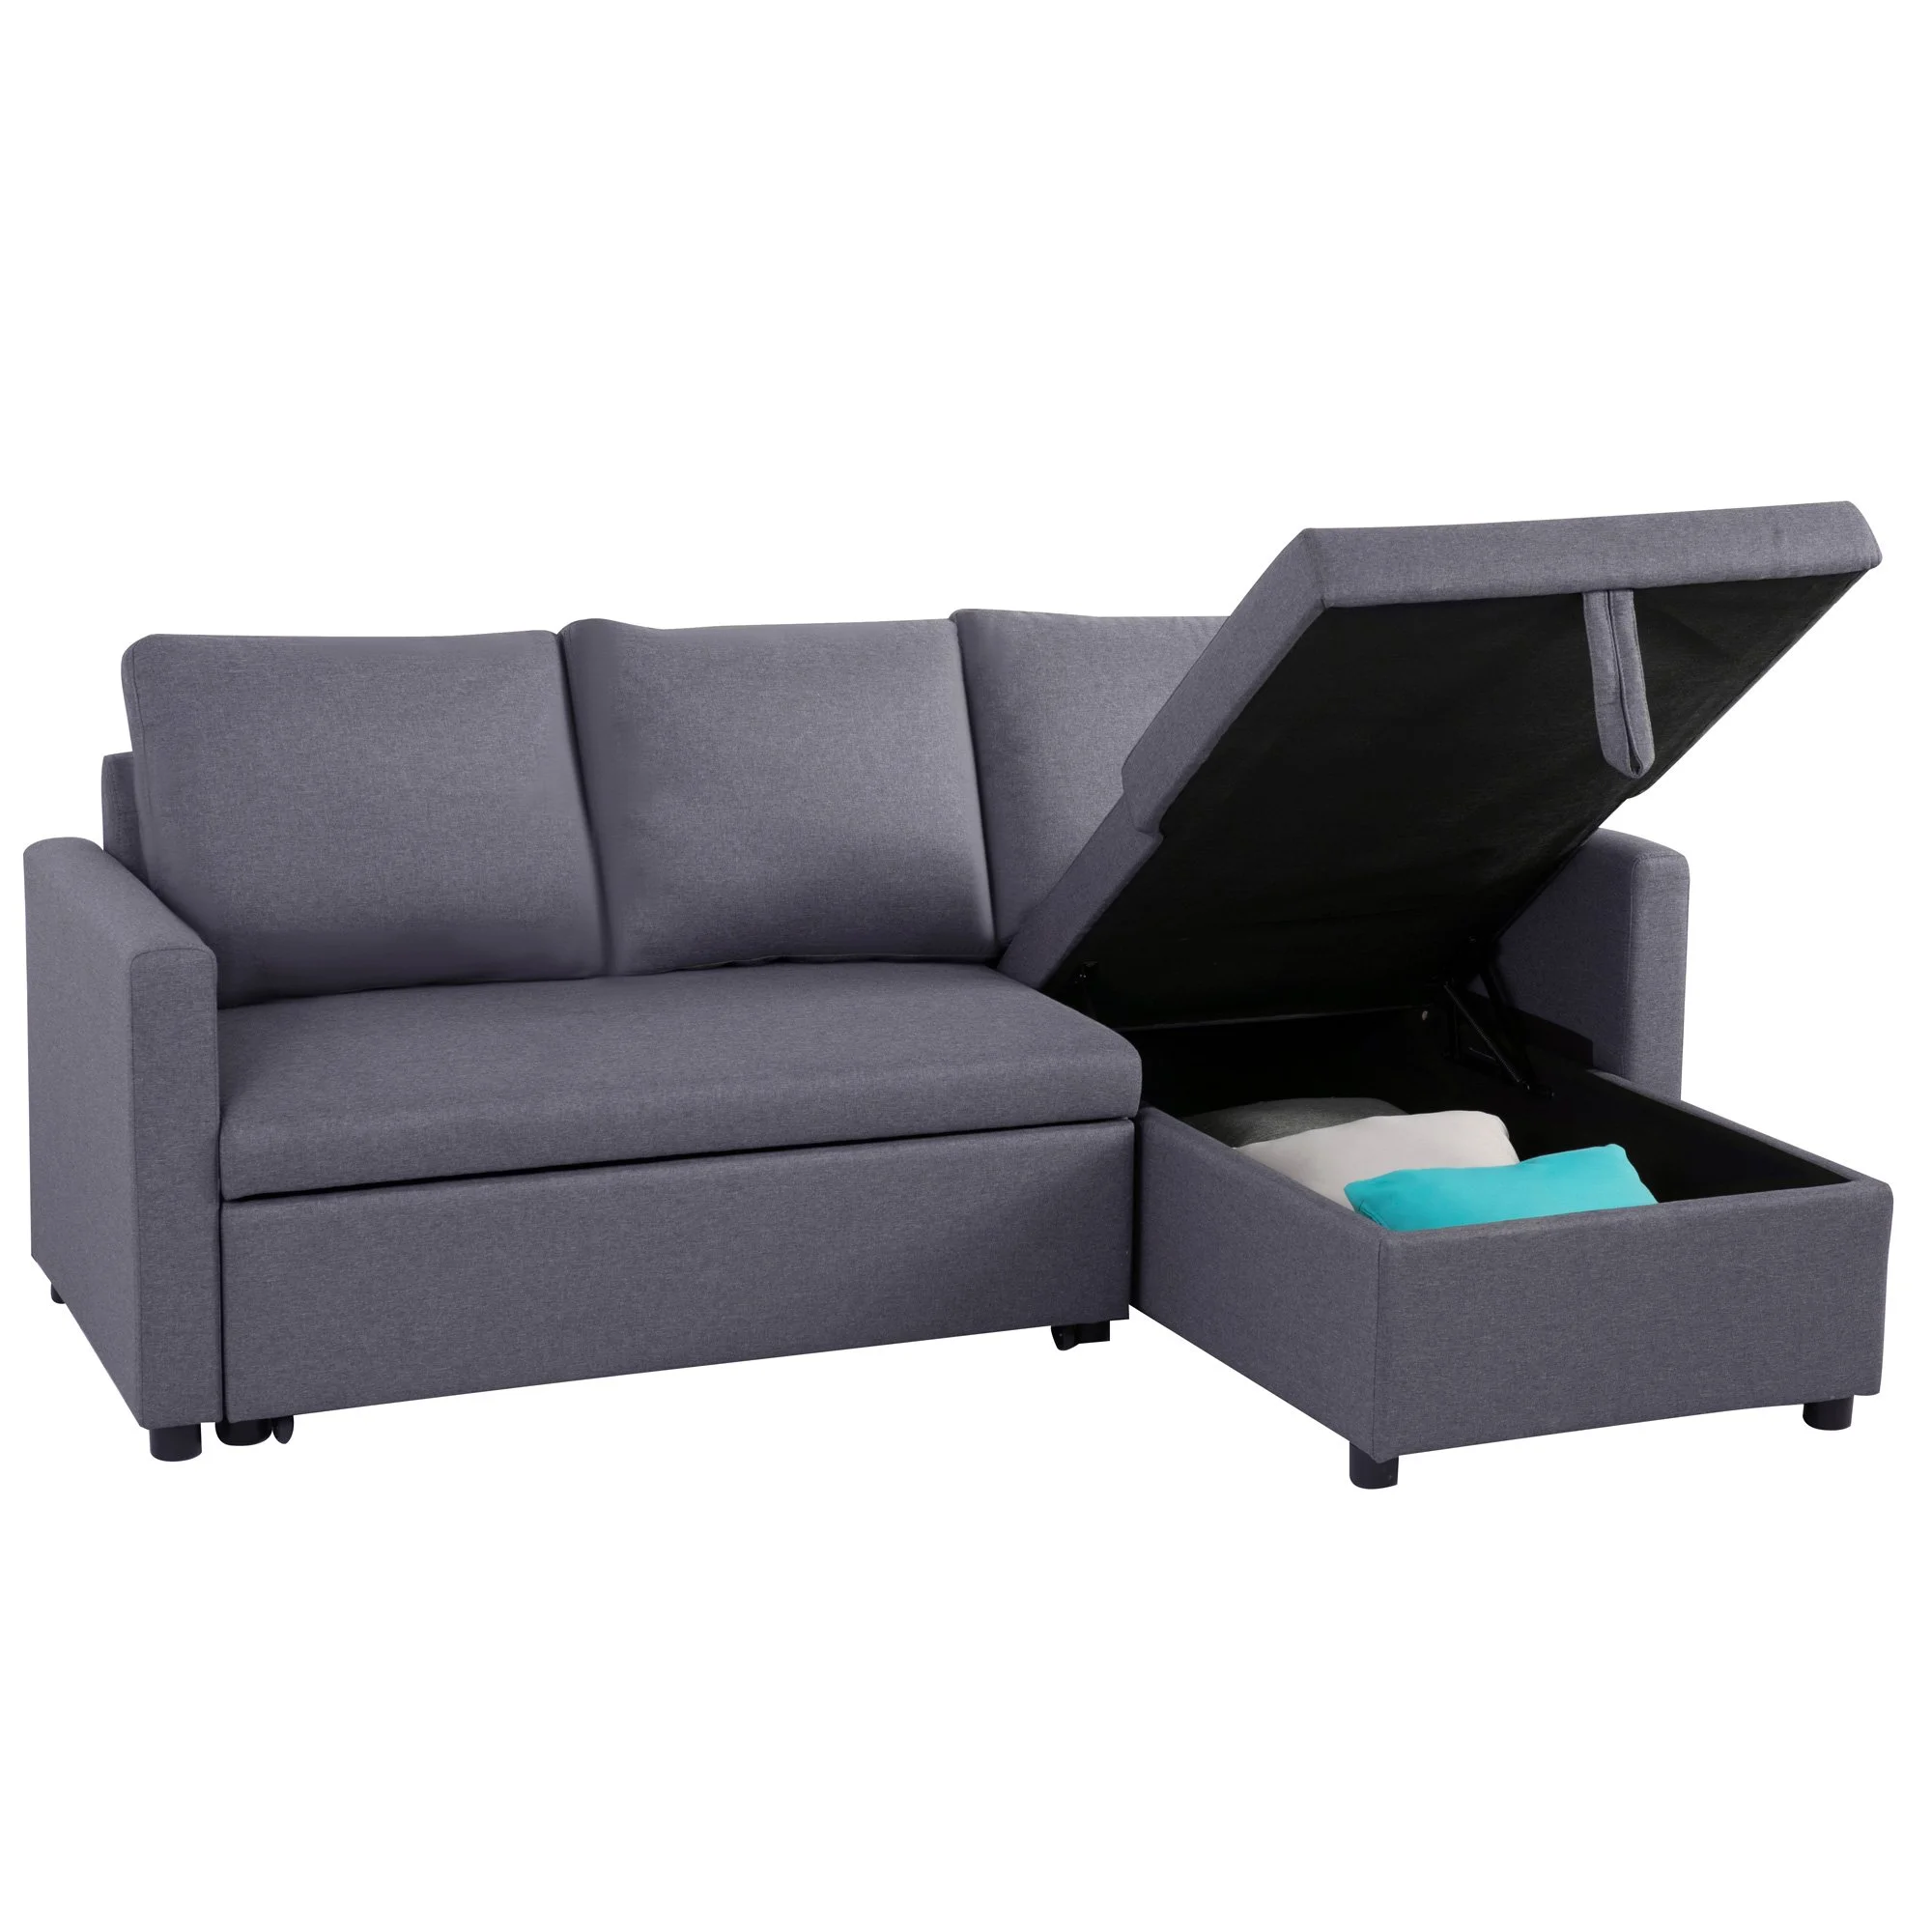 DREAMO Sofa Bed Storage Couch